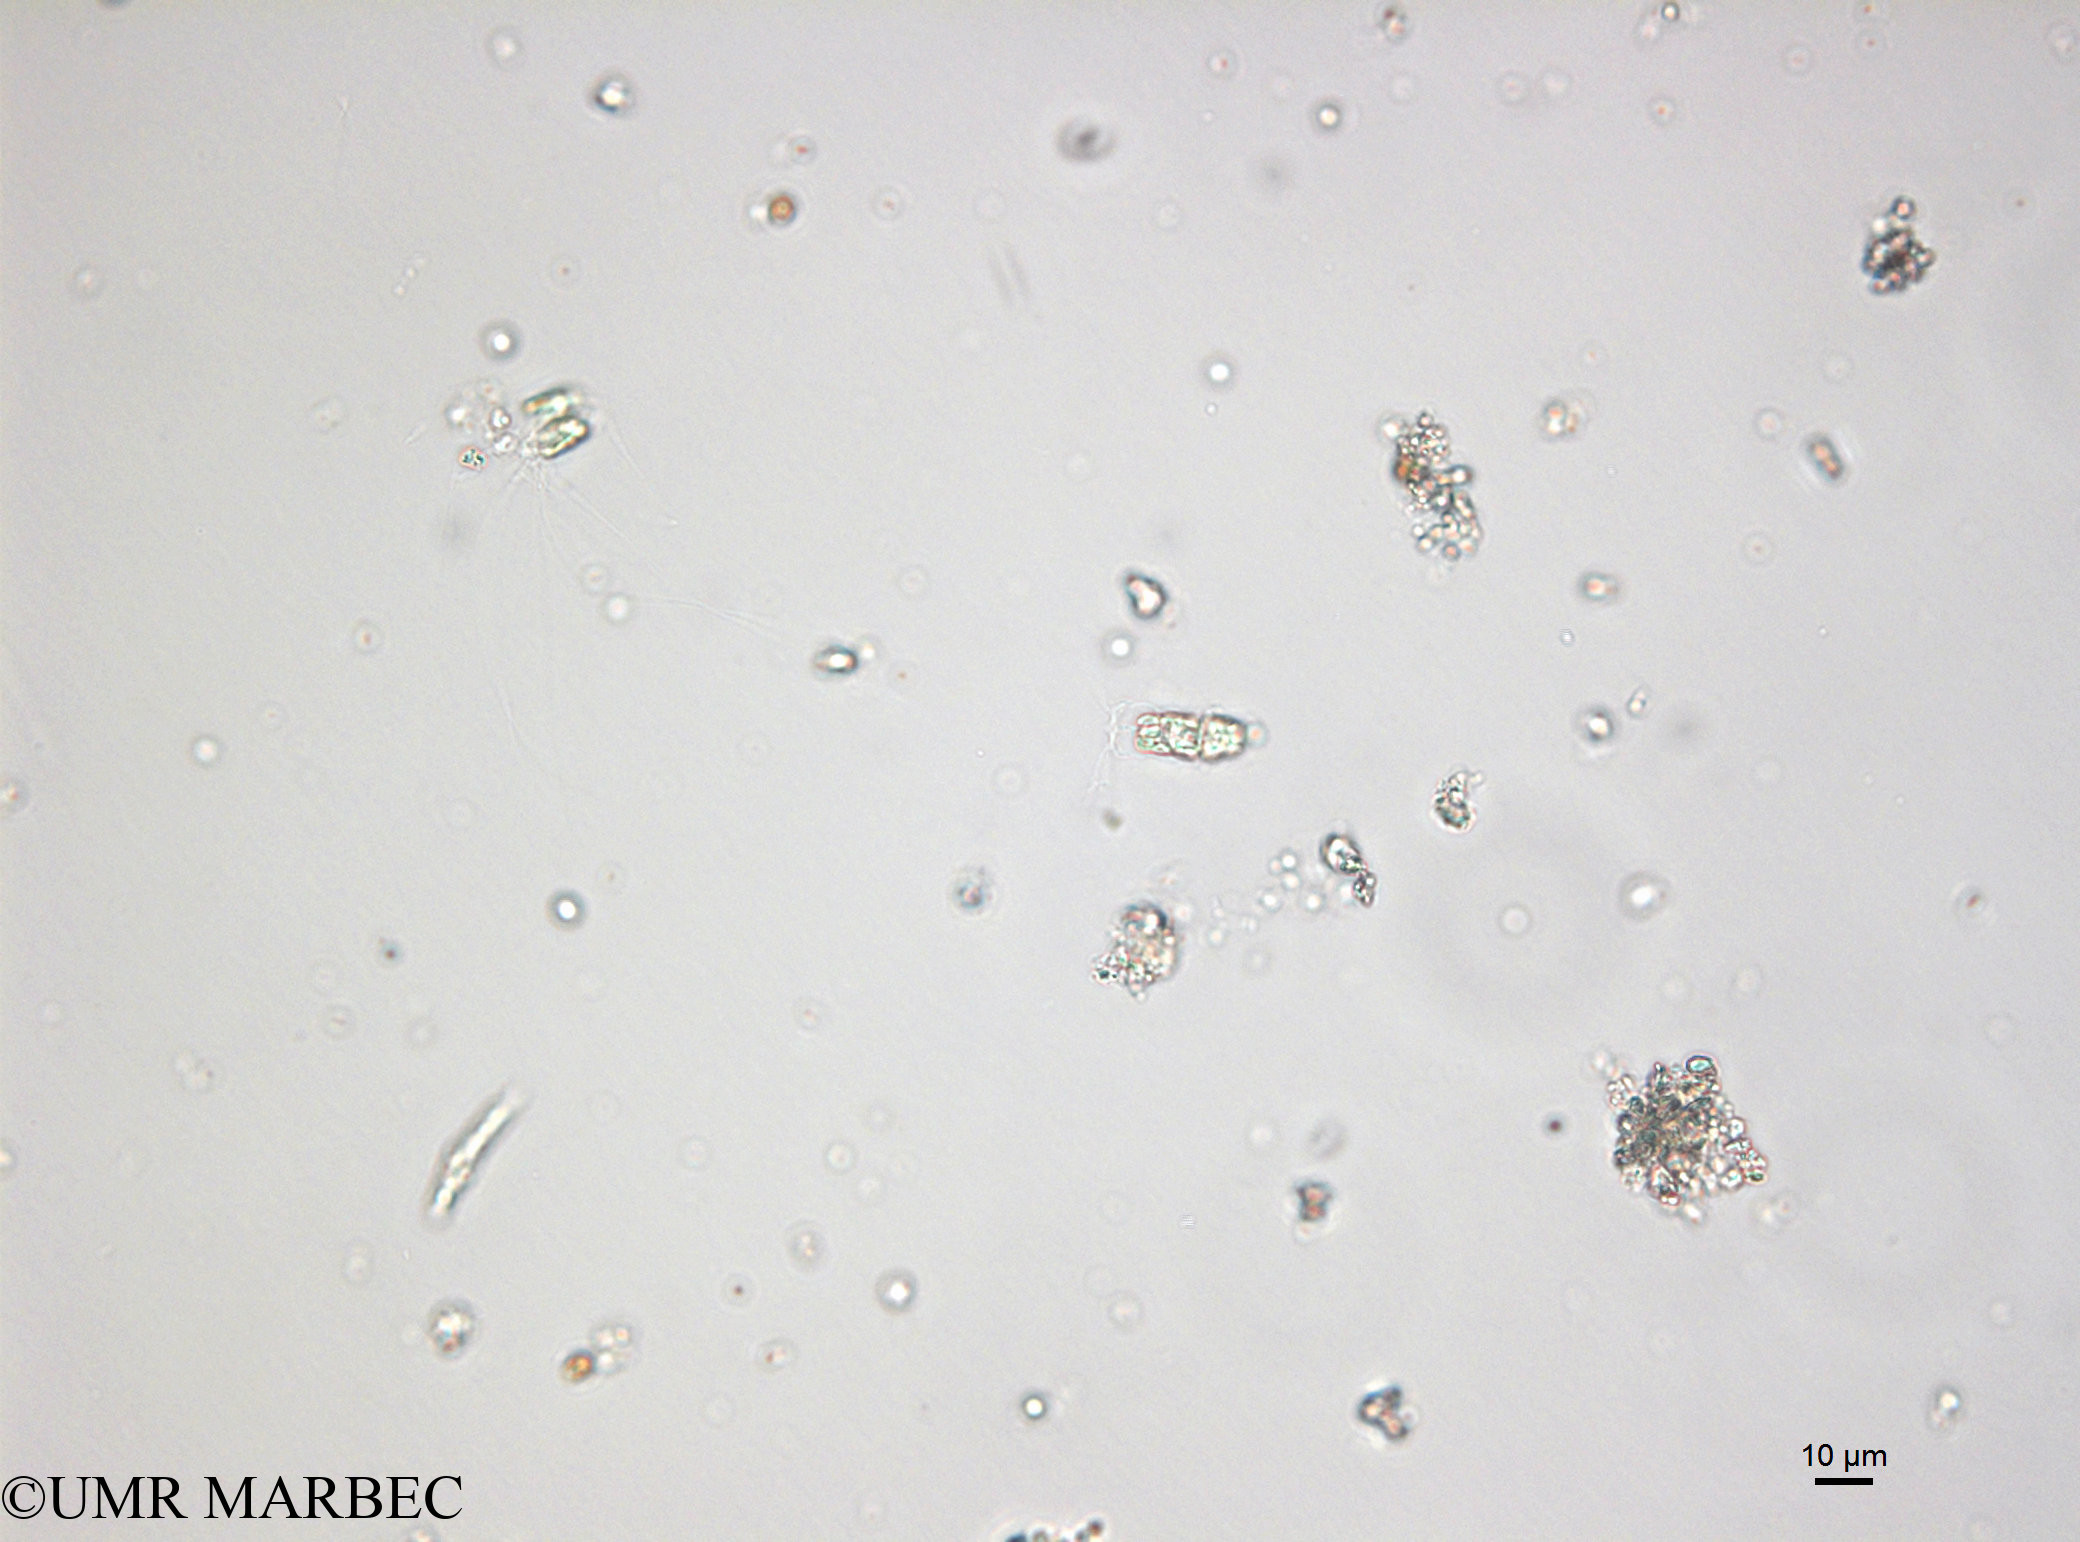 phyto/Bizerte/bizerte_bay/RISCO April 2014/Bacteriastrum sp10 (ancien B. sp4 -150109_001_ovl-6)(copy).jpg